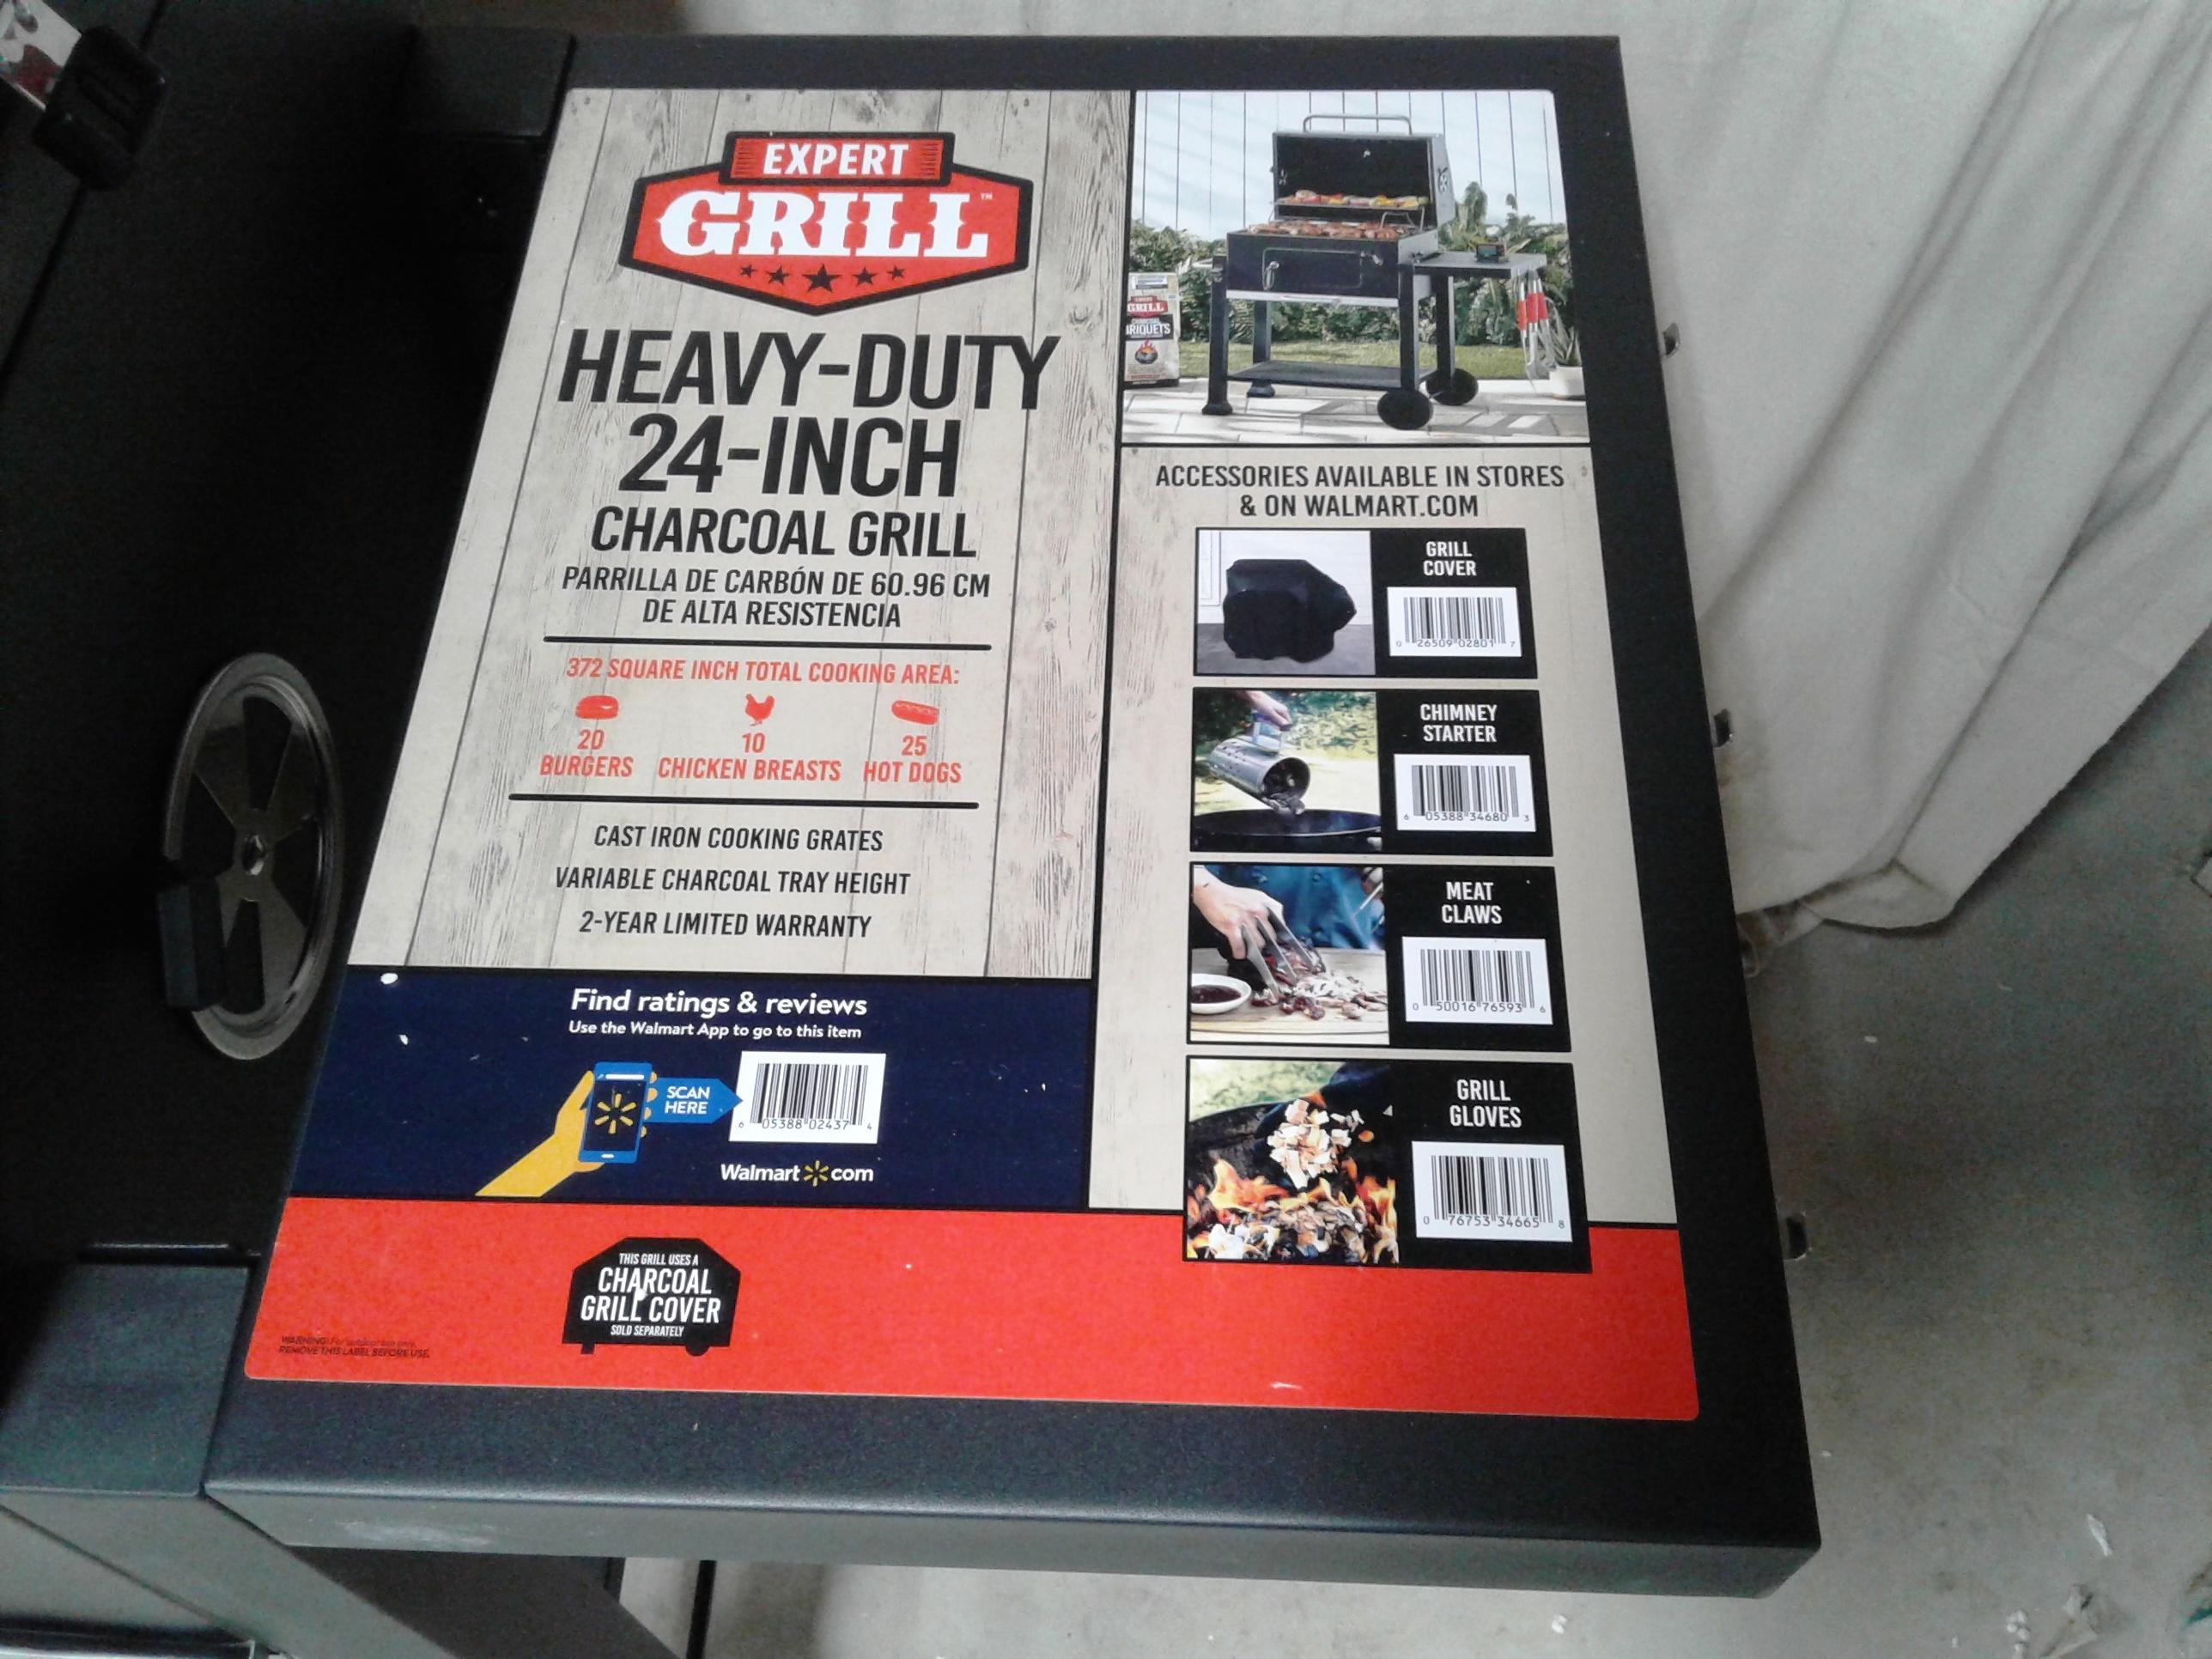 24" Charcoal Grill Heavy Duty